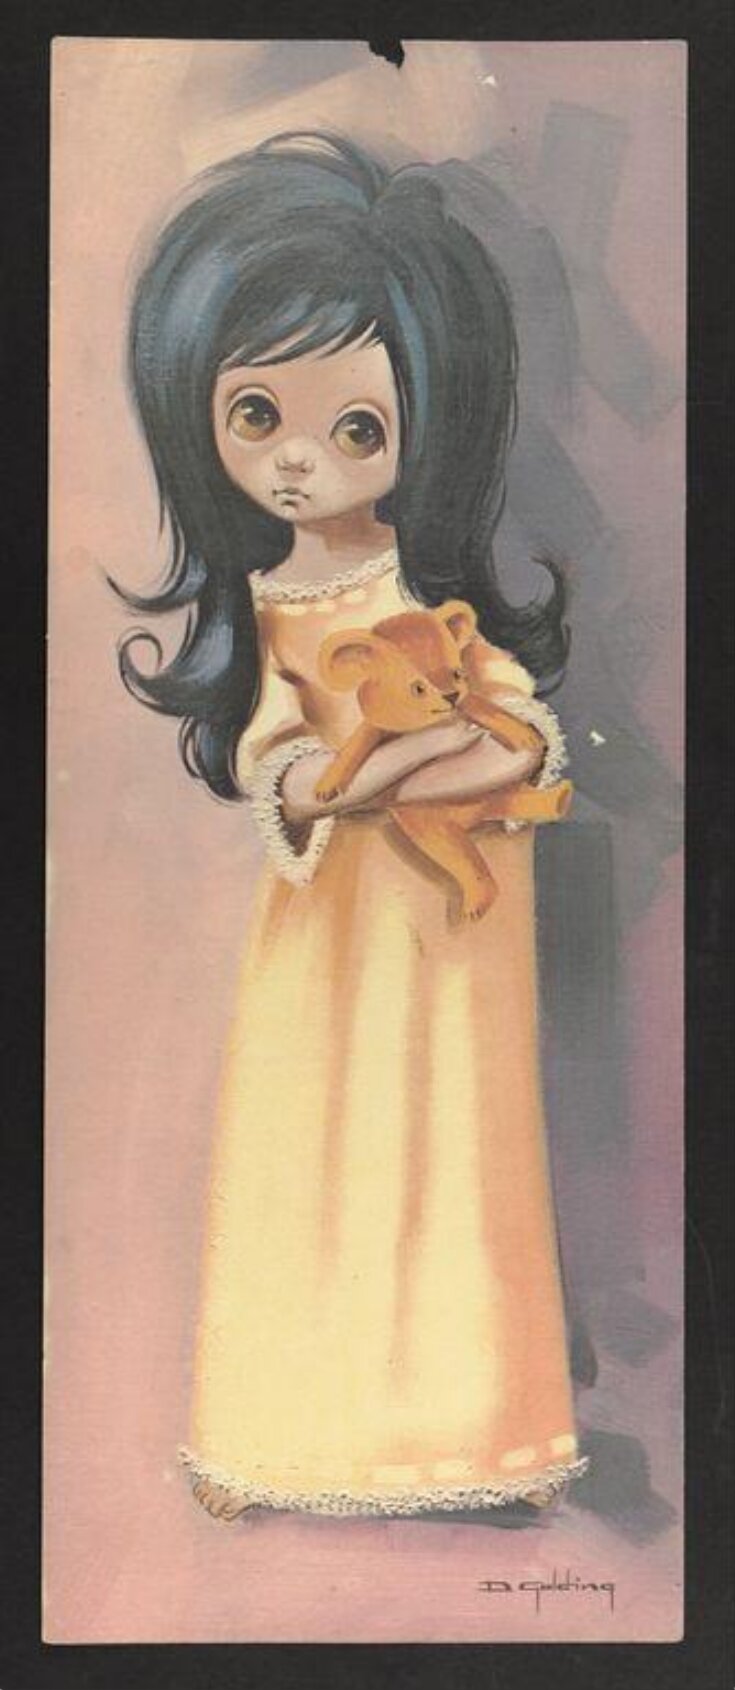 Large-eyed girl holding teddy bear top image